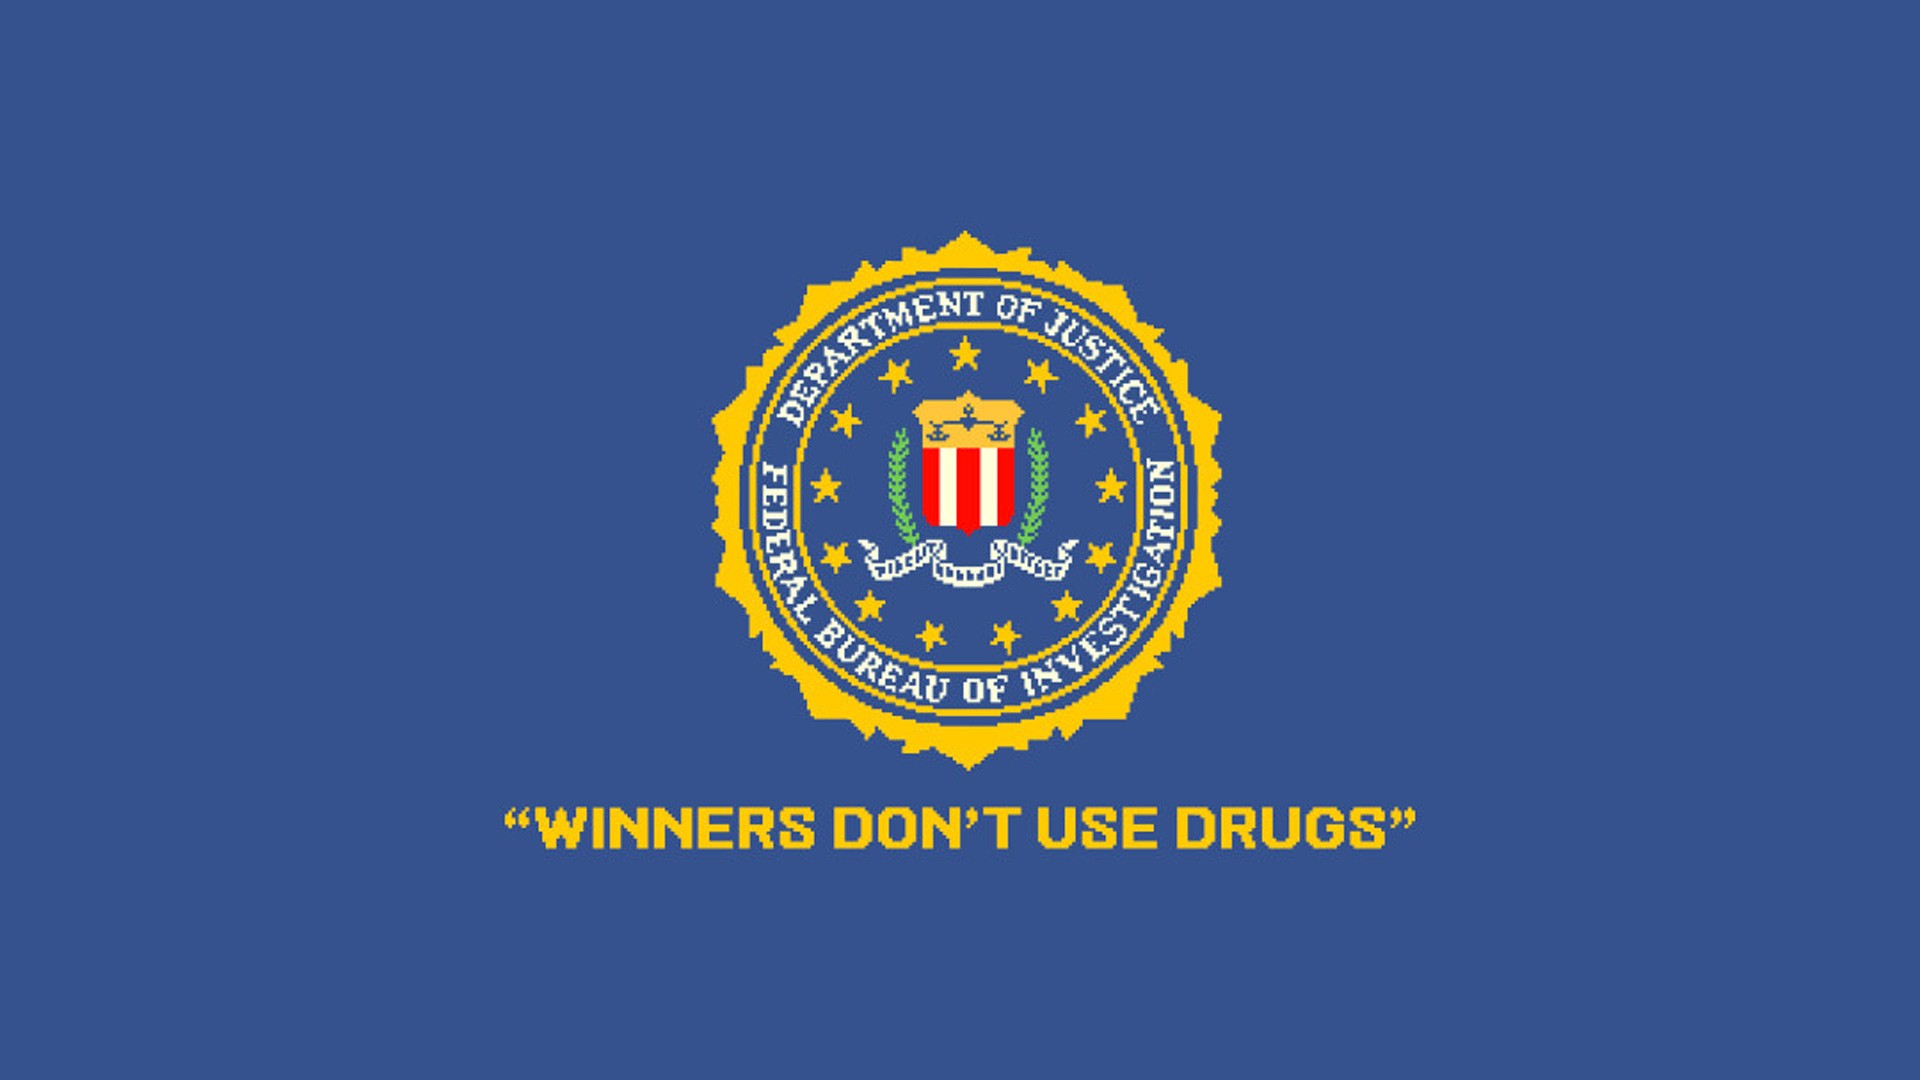 Winners don't use drugs